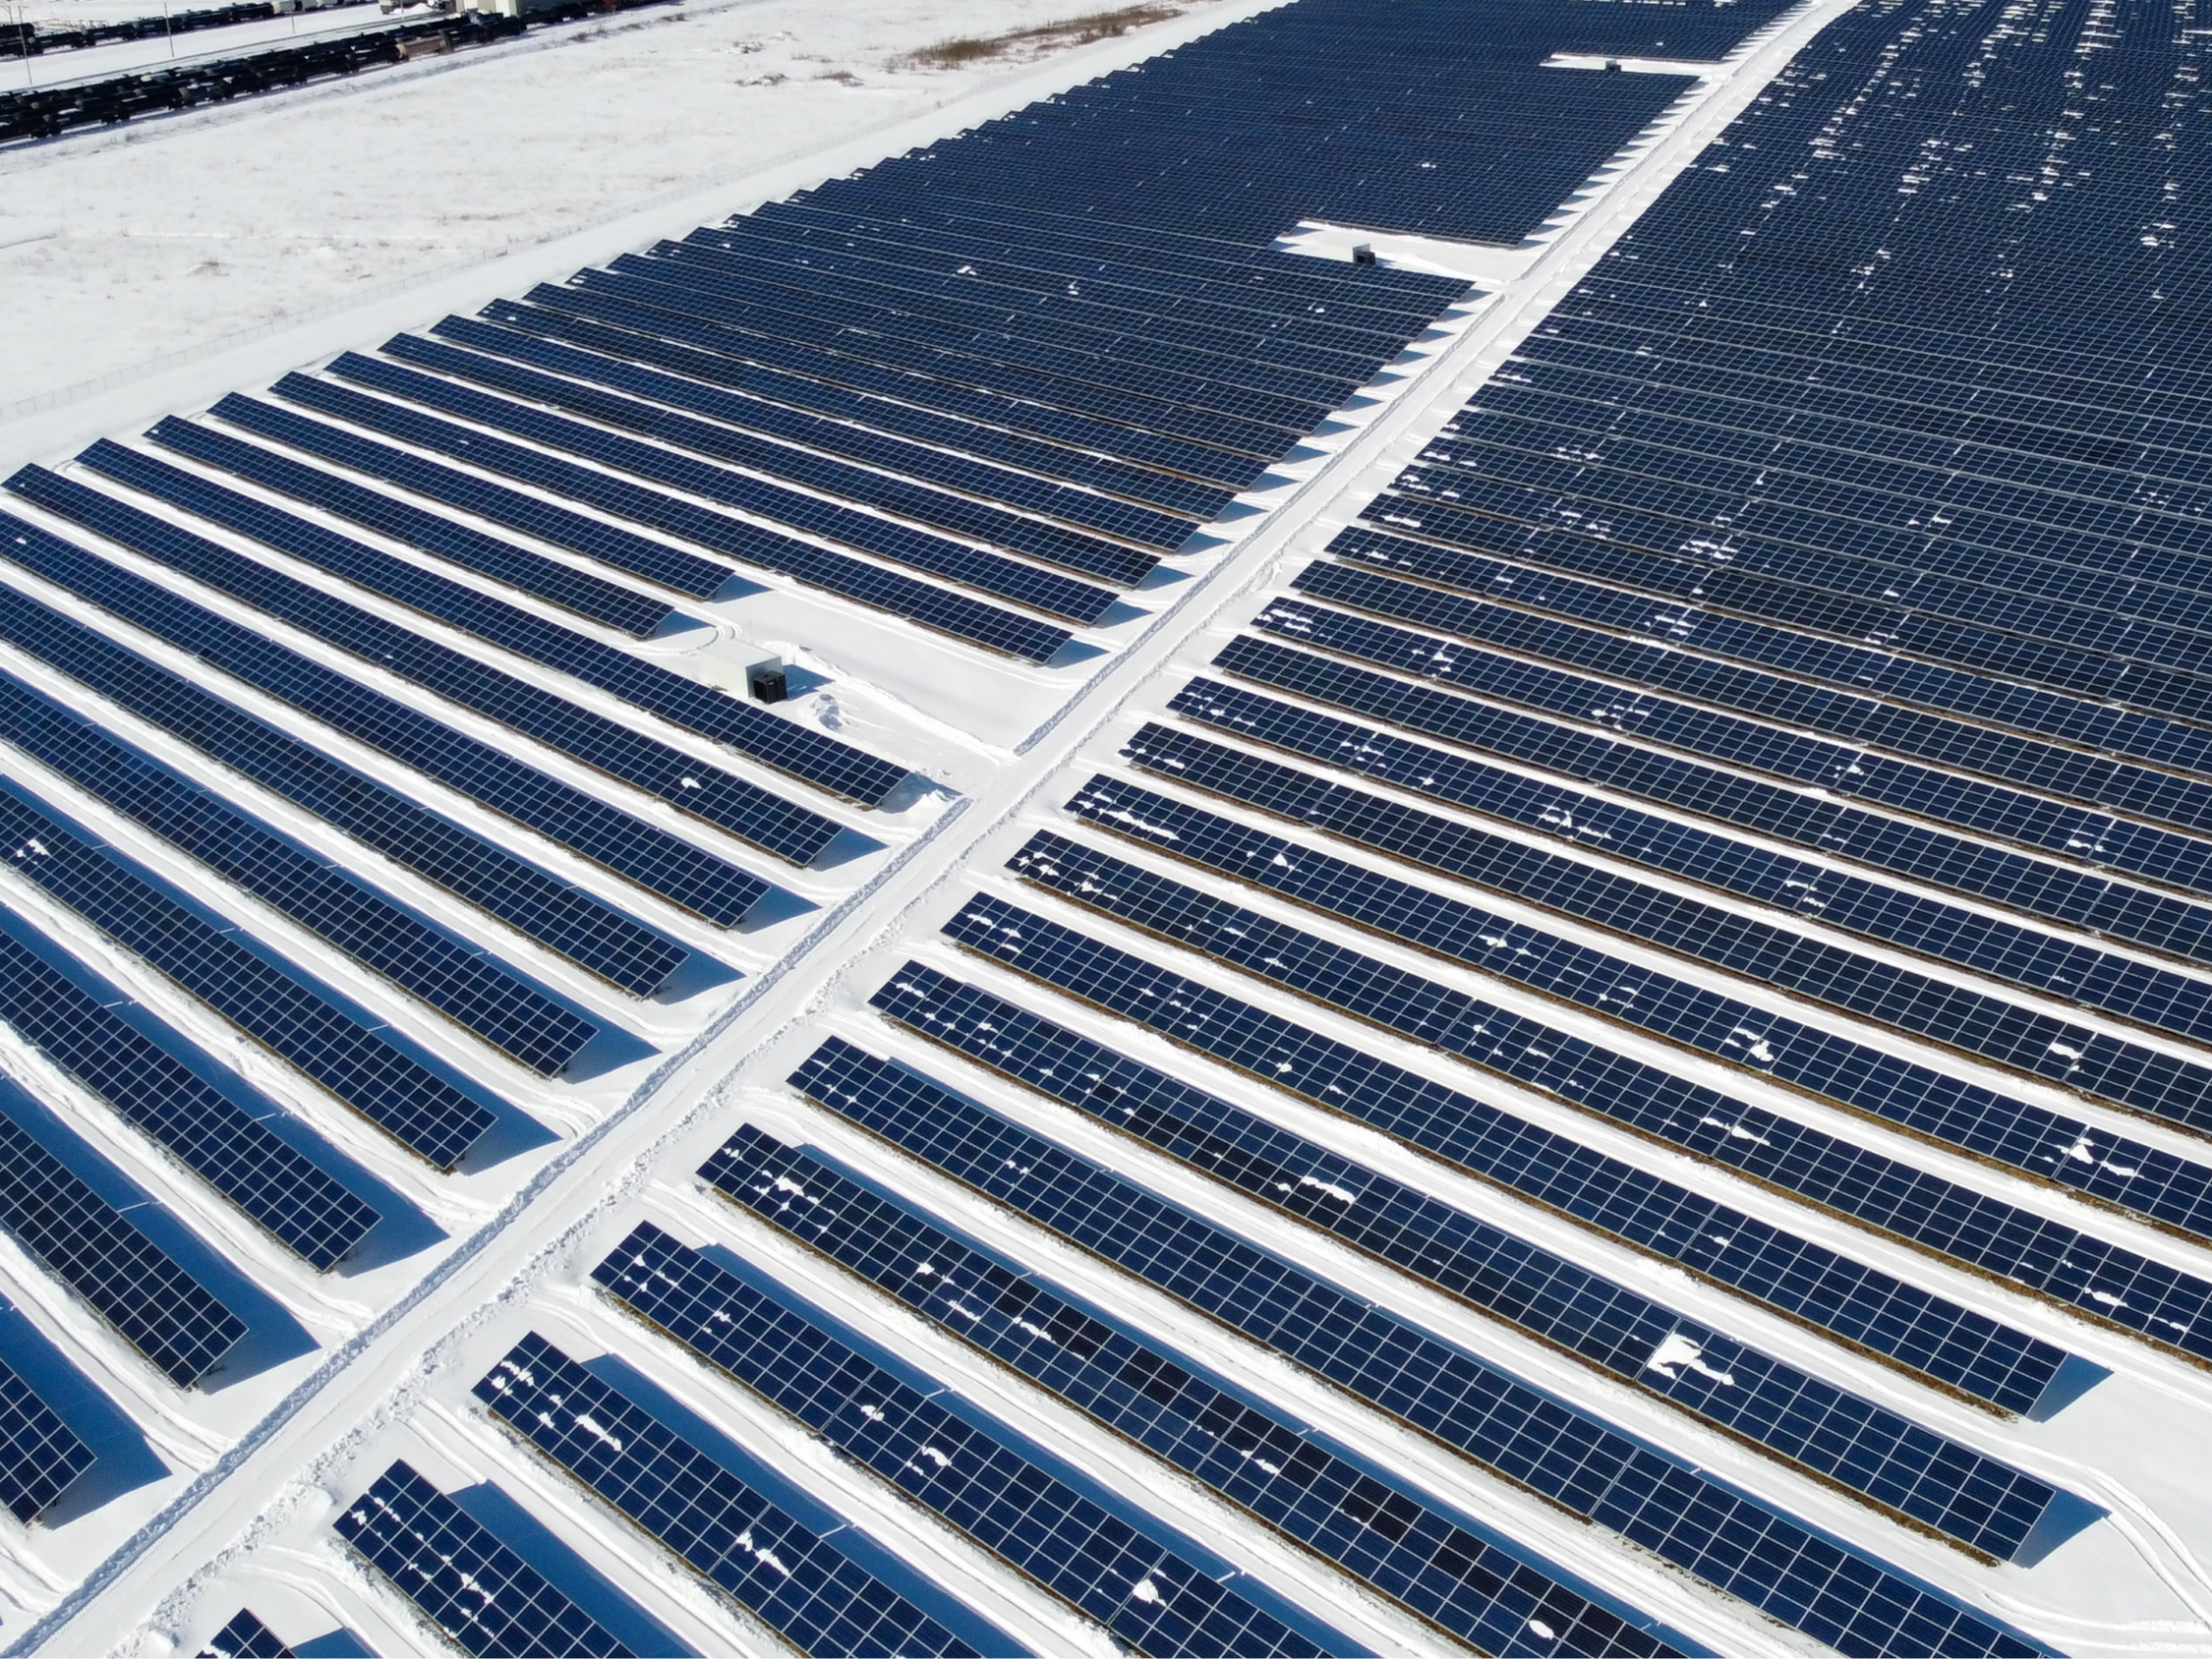 Maximizing solar power production during snow seasons